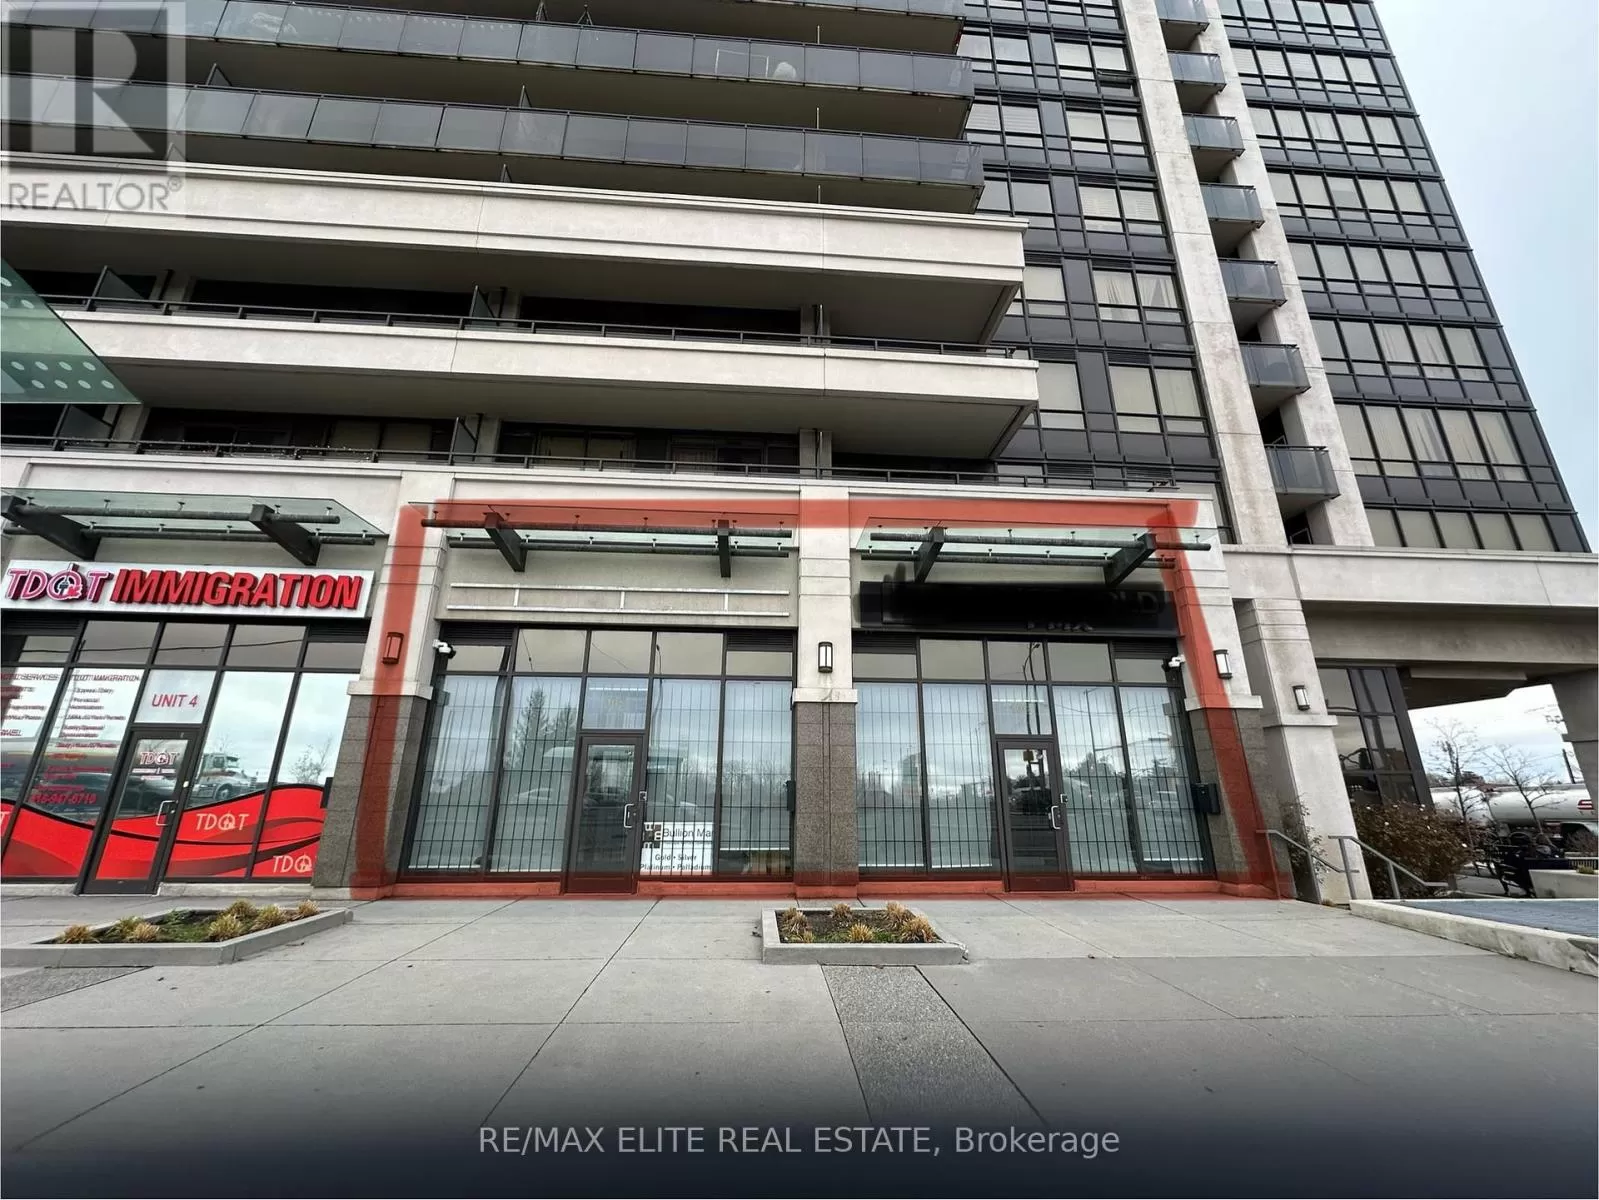 Retail for rent: 105&106 - 1060 Sheppard Avenue W, Toronto, Ontario M3J 0G7